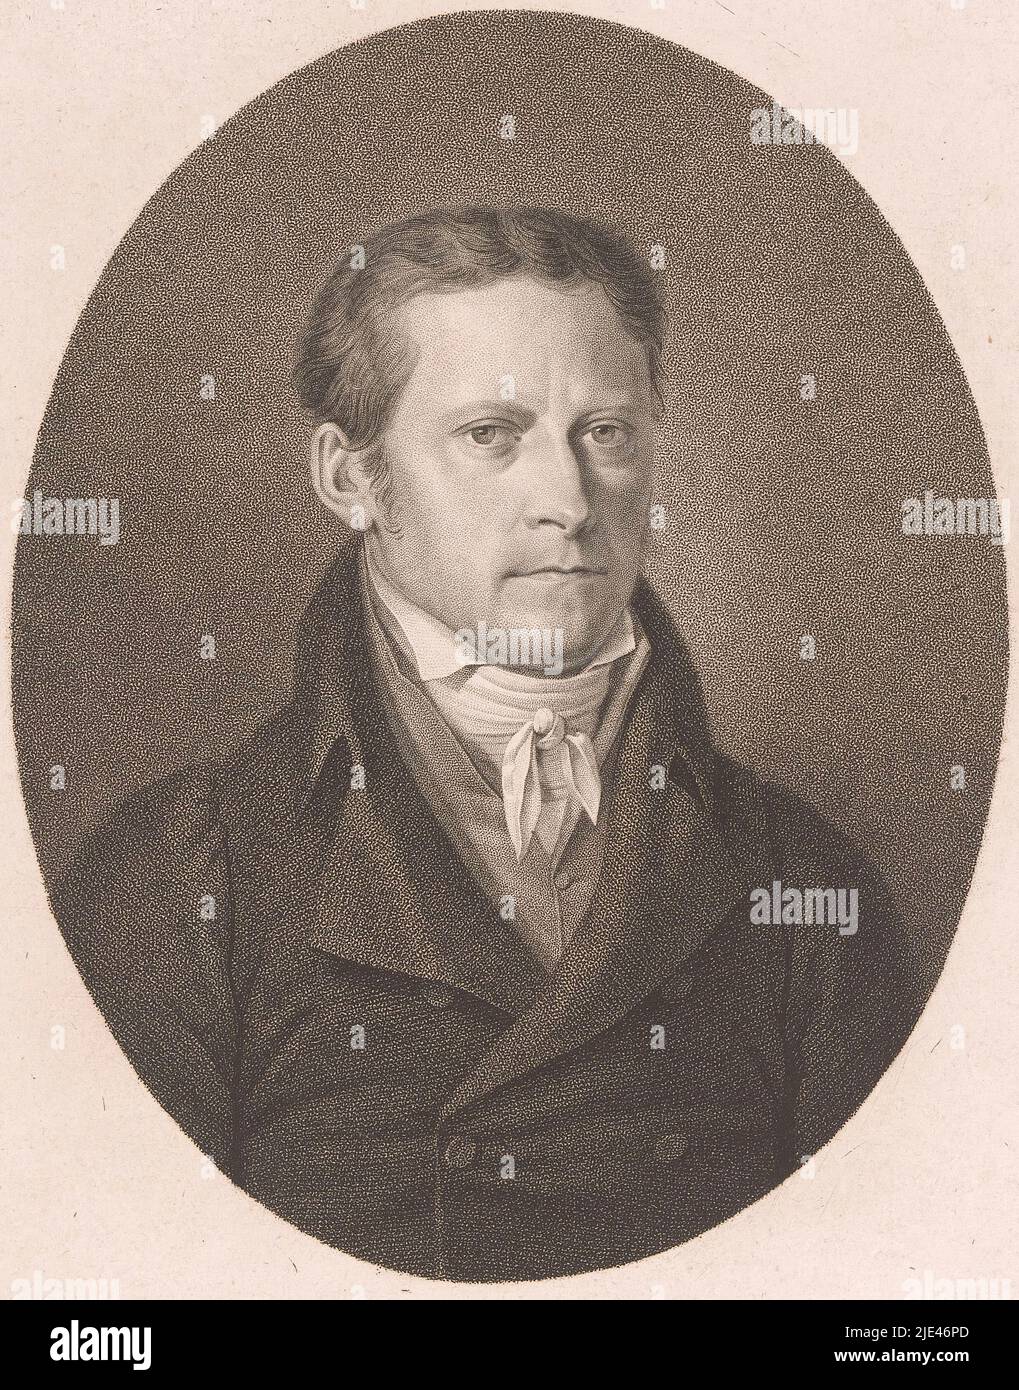 Portrait of Ernst Horn, Friedrich Wilhelm Bollinger, after Heinrich Anton Dähling, 1816, print maker: Friedrich Wilhelm Bollinger, after: Heinrich Anton Dähling, Berlin, 1816, paper, h 269 mm - w 206 mm Stock Photo